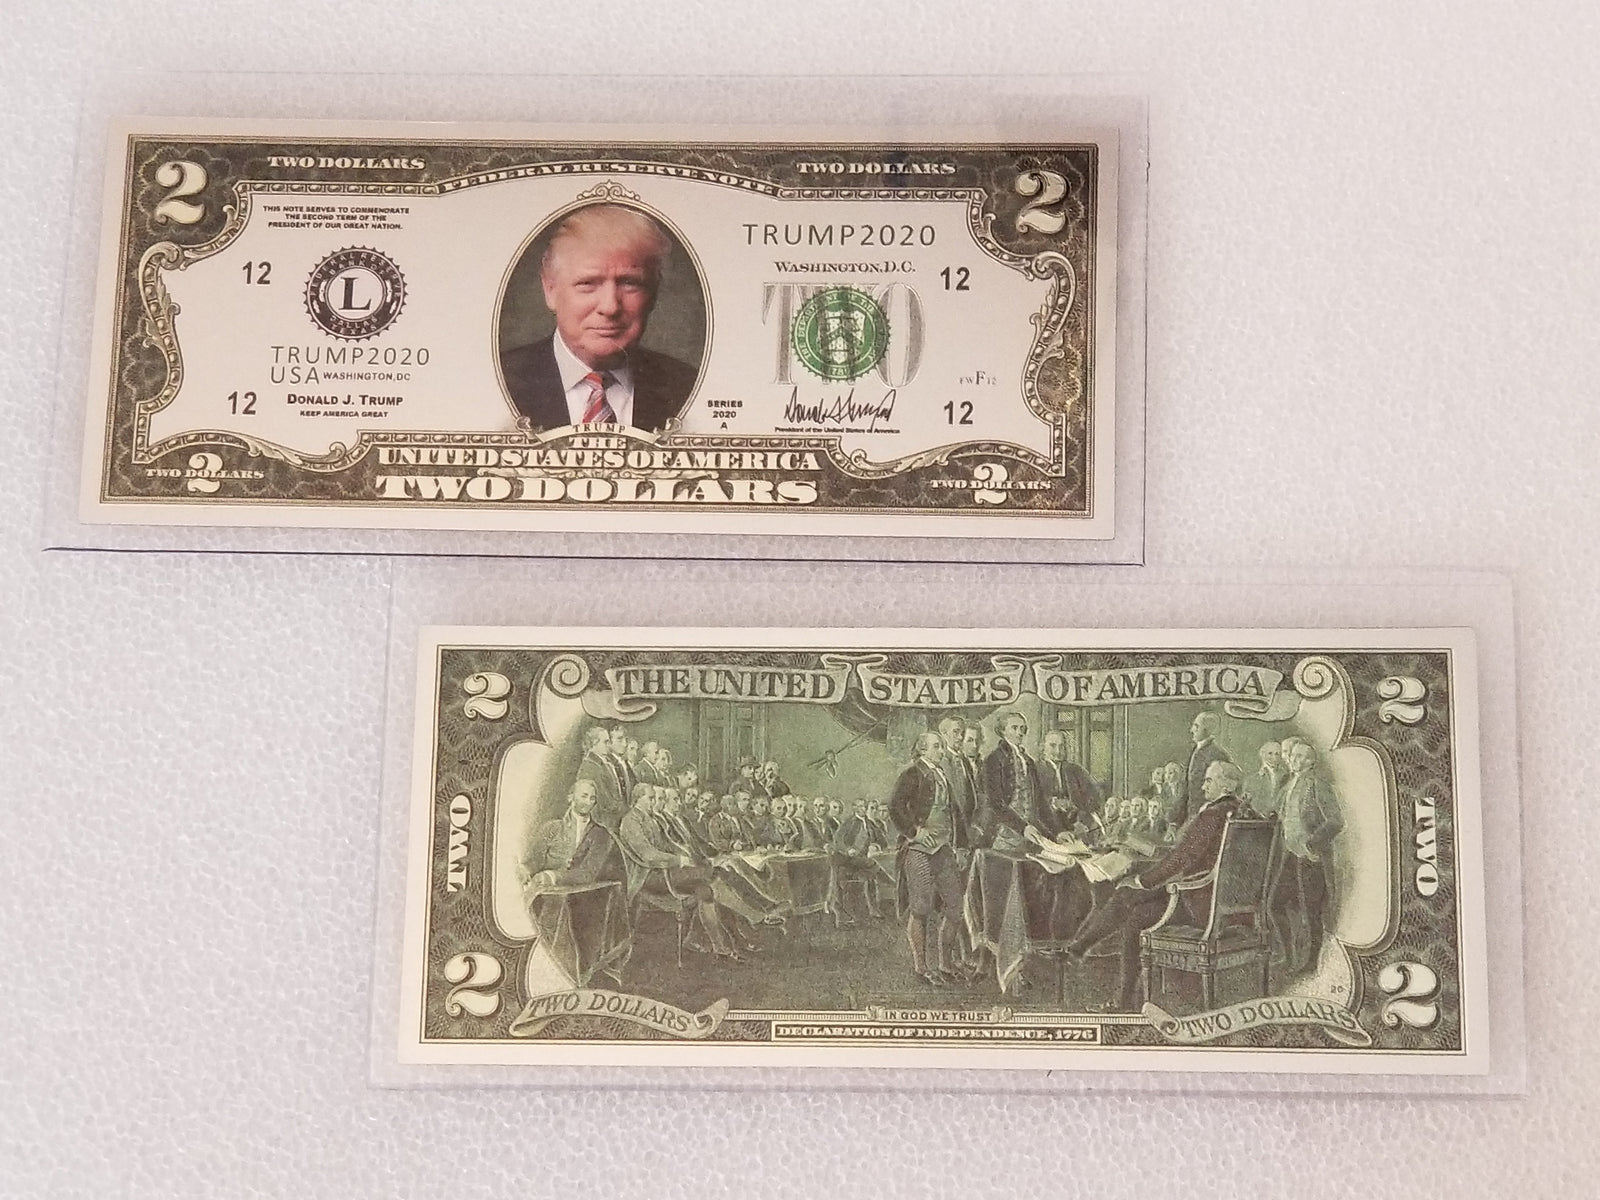 Trump Silver $2 Collectible Bill